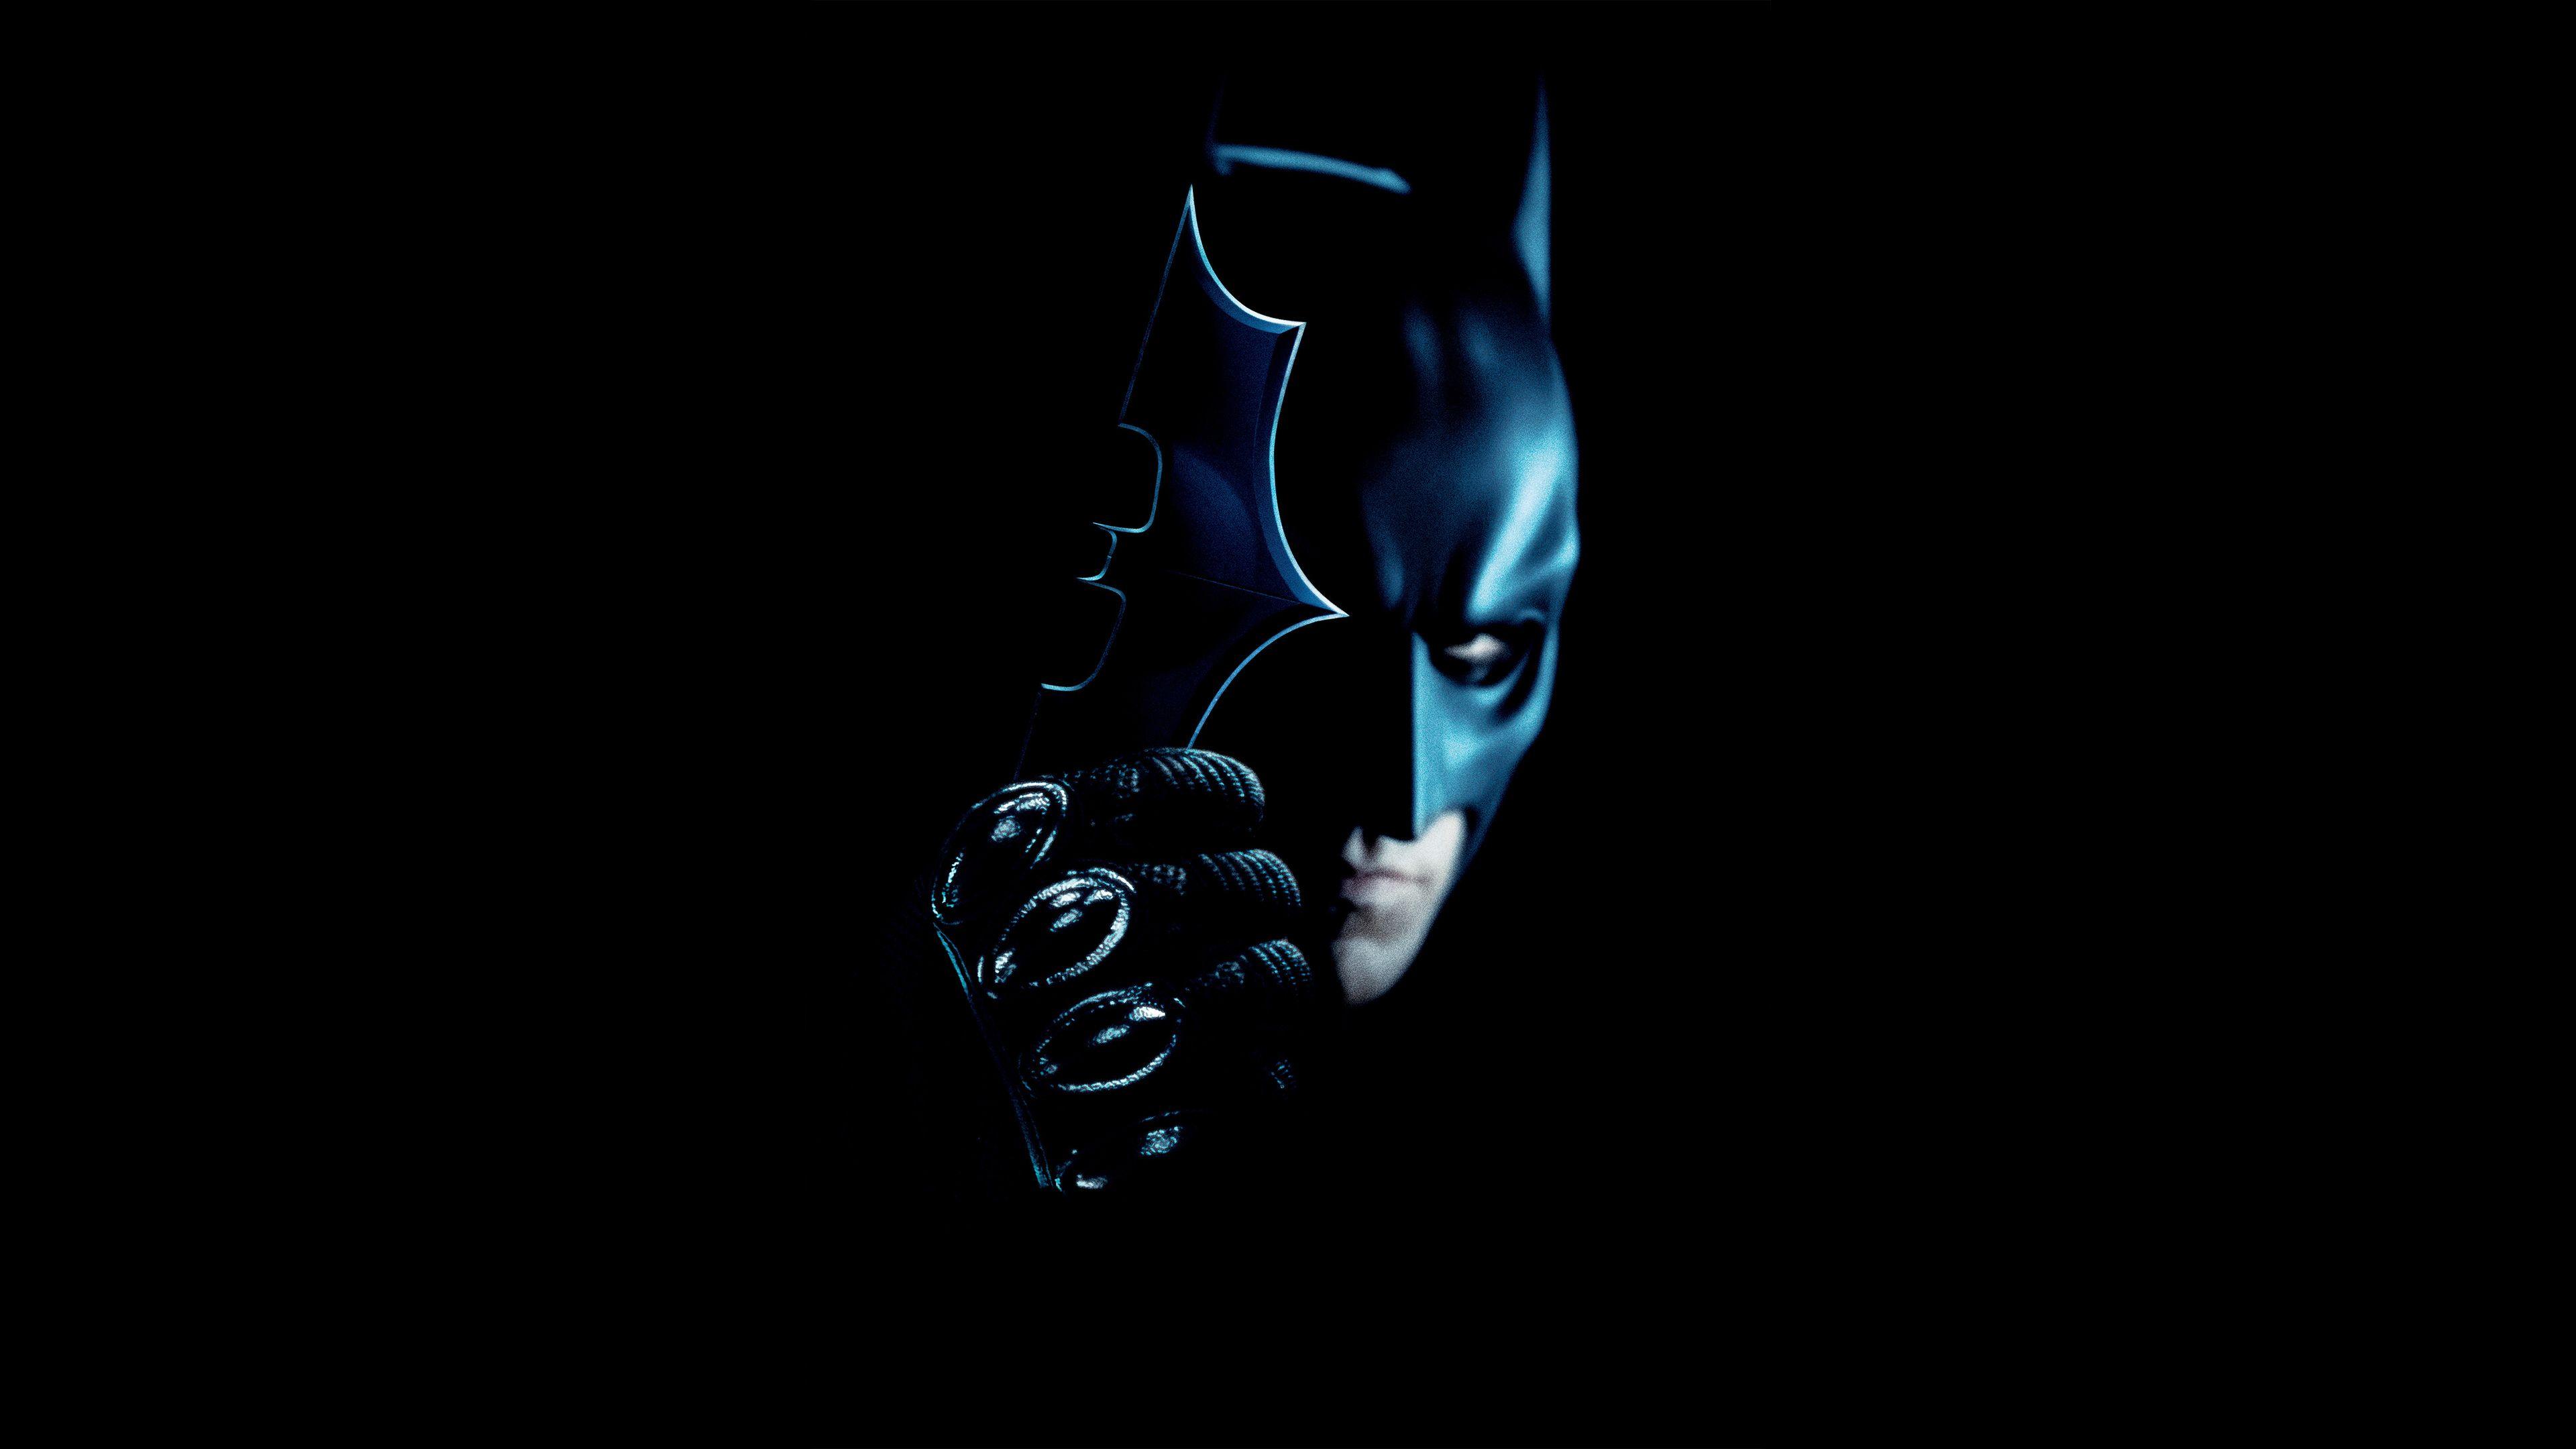 The Dark Knight 5k superheroes wallpaper, movies wallpaper